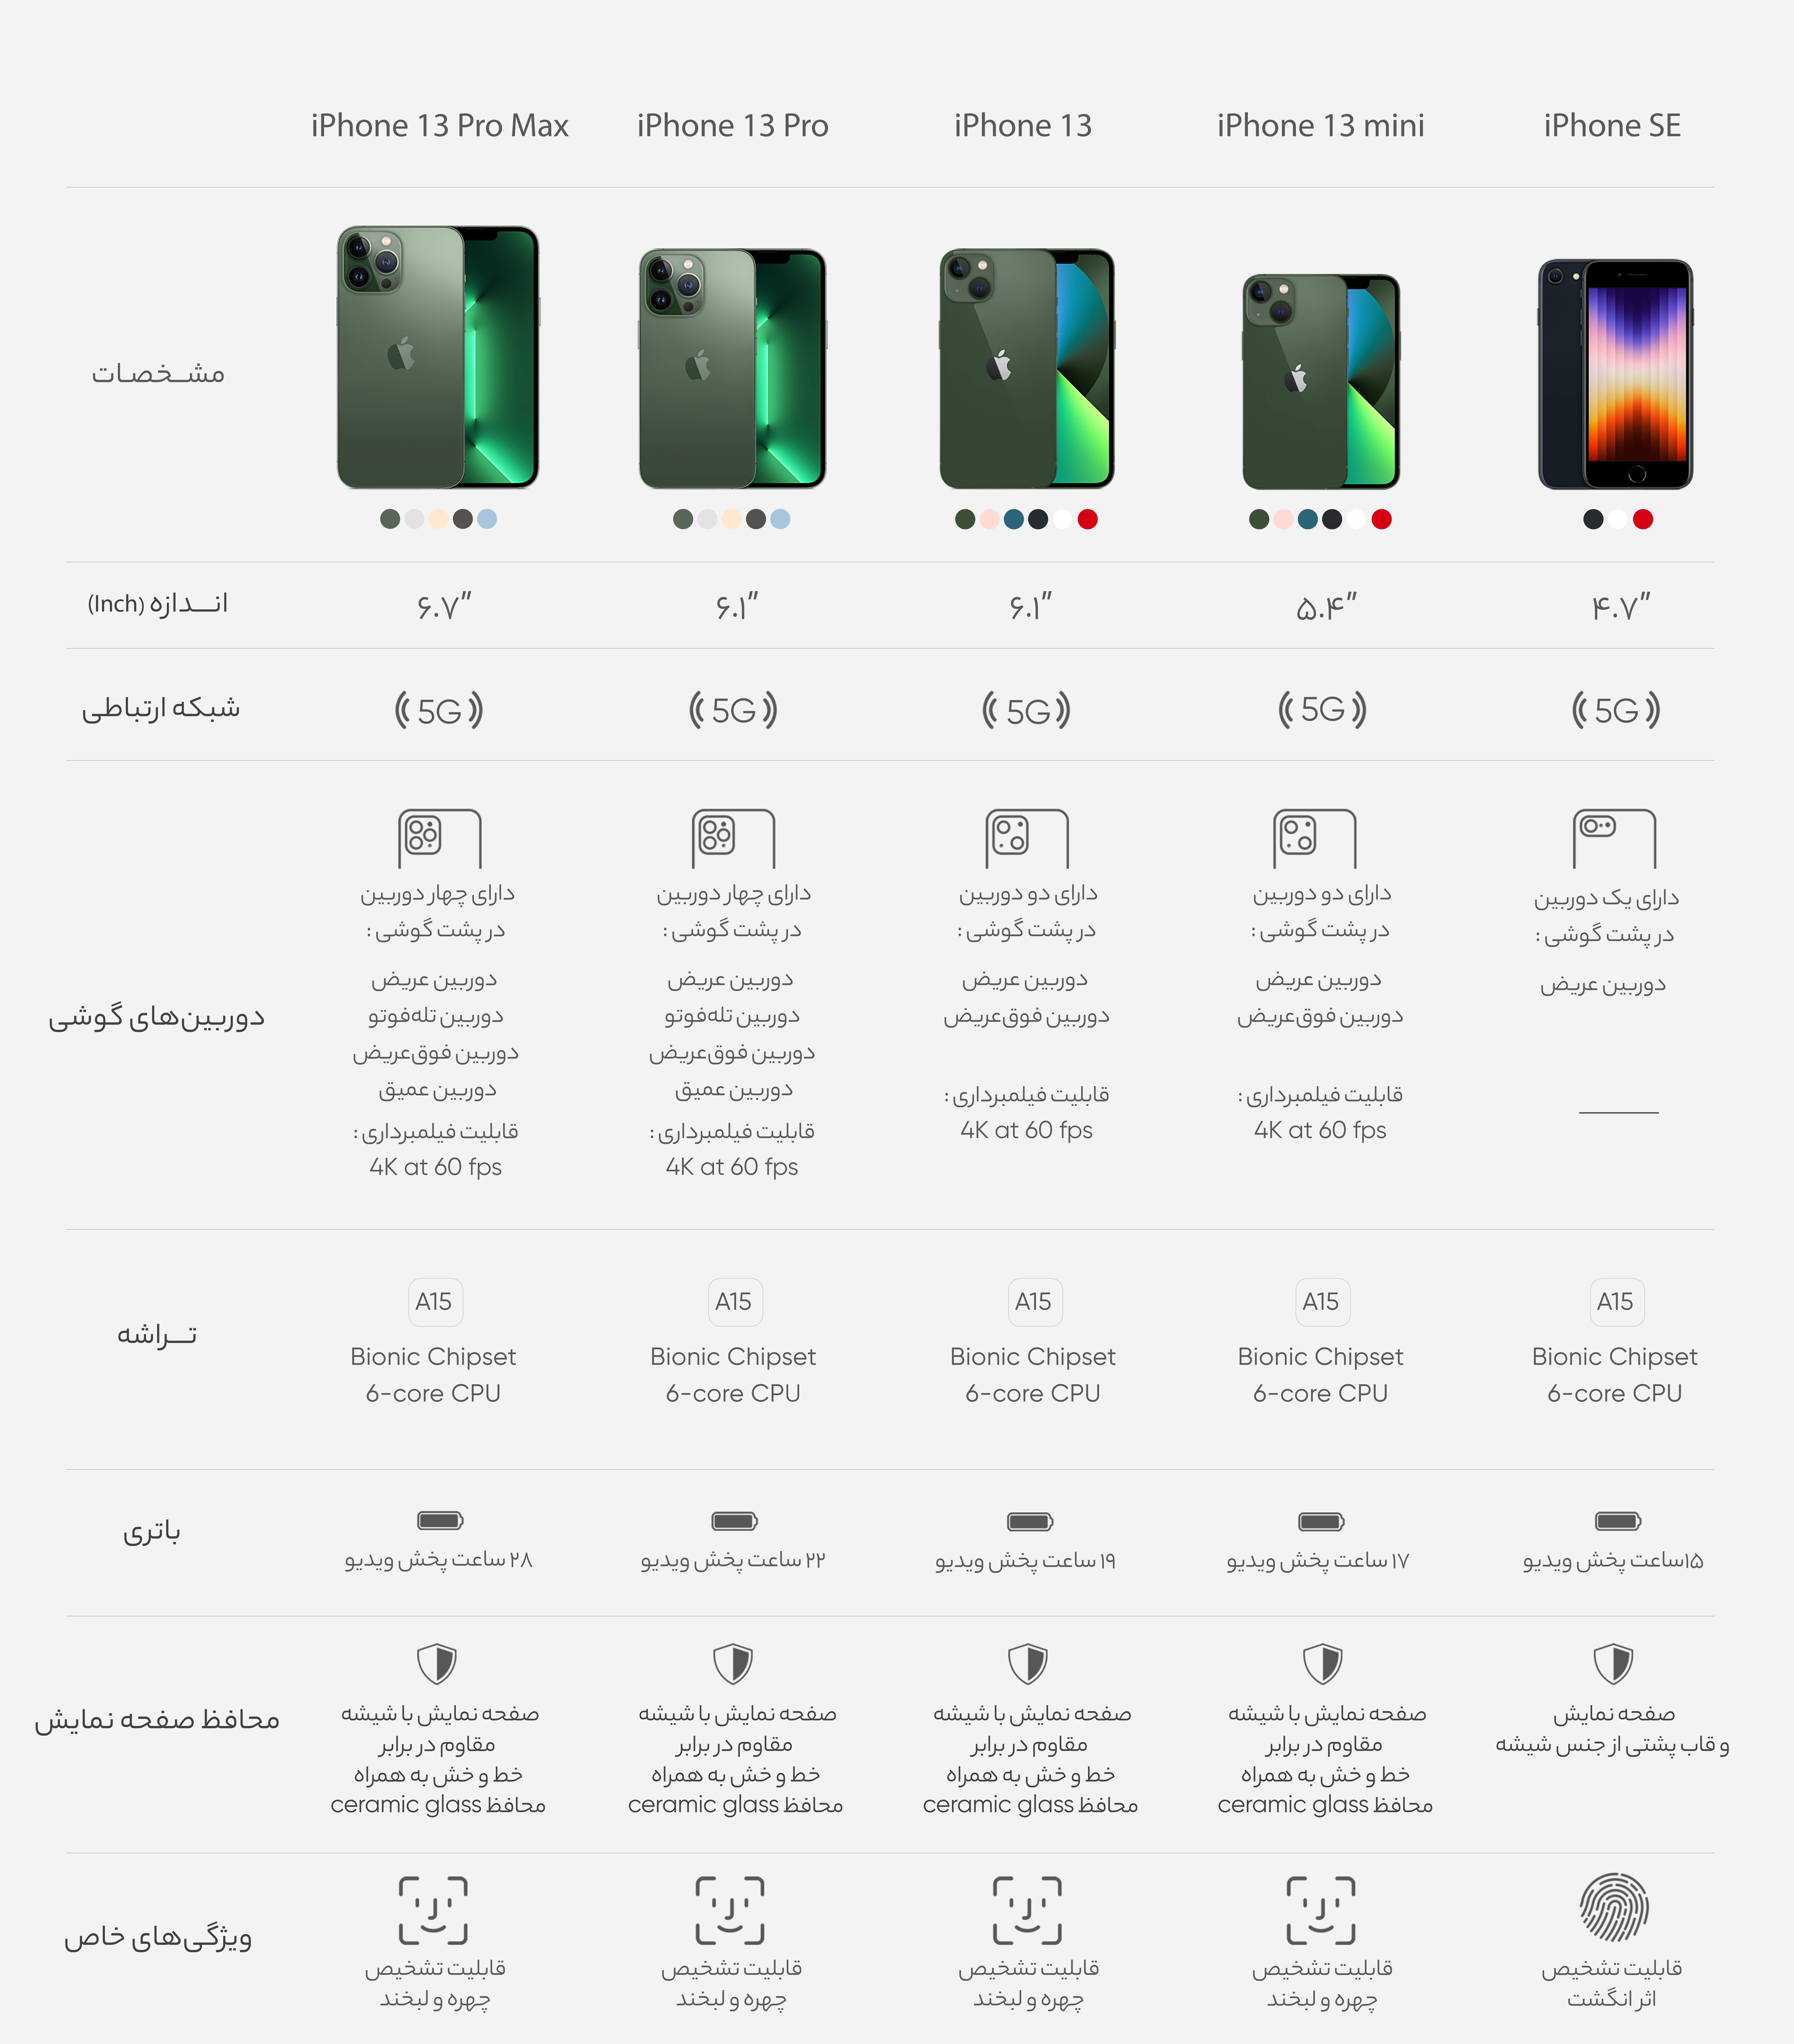 iphone 13 series vs se